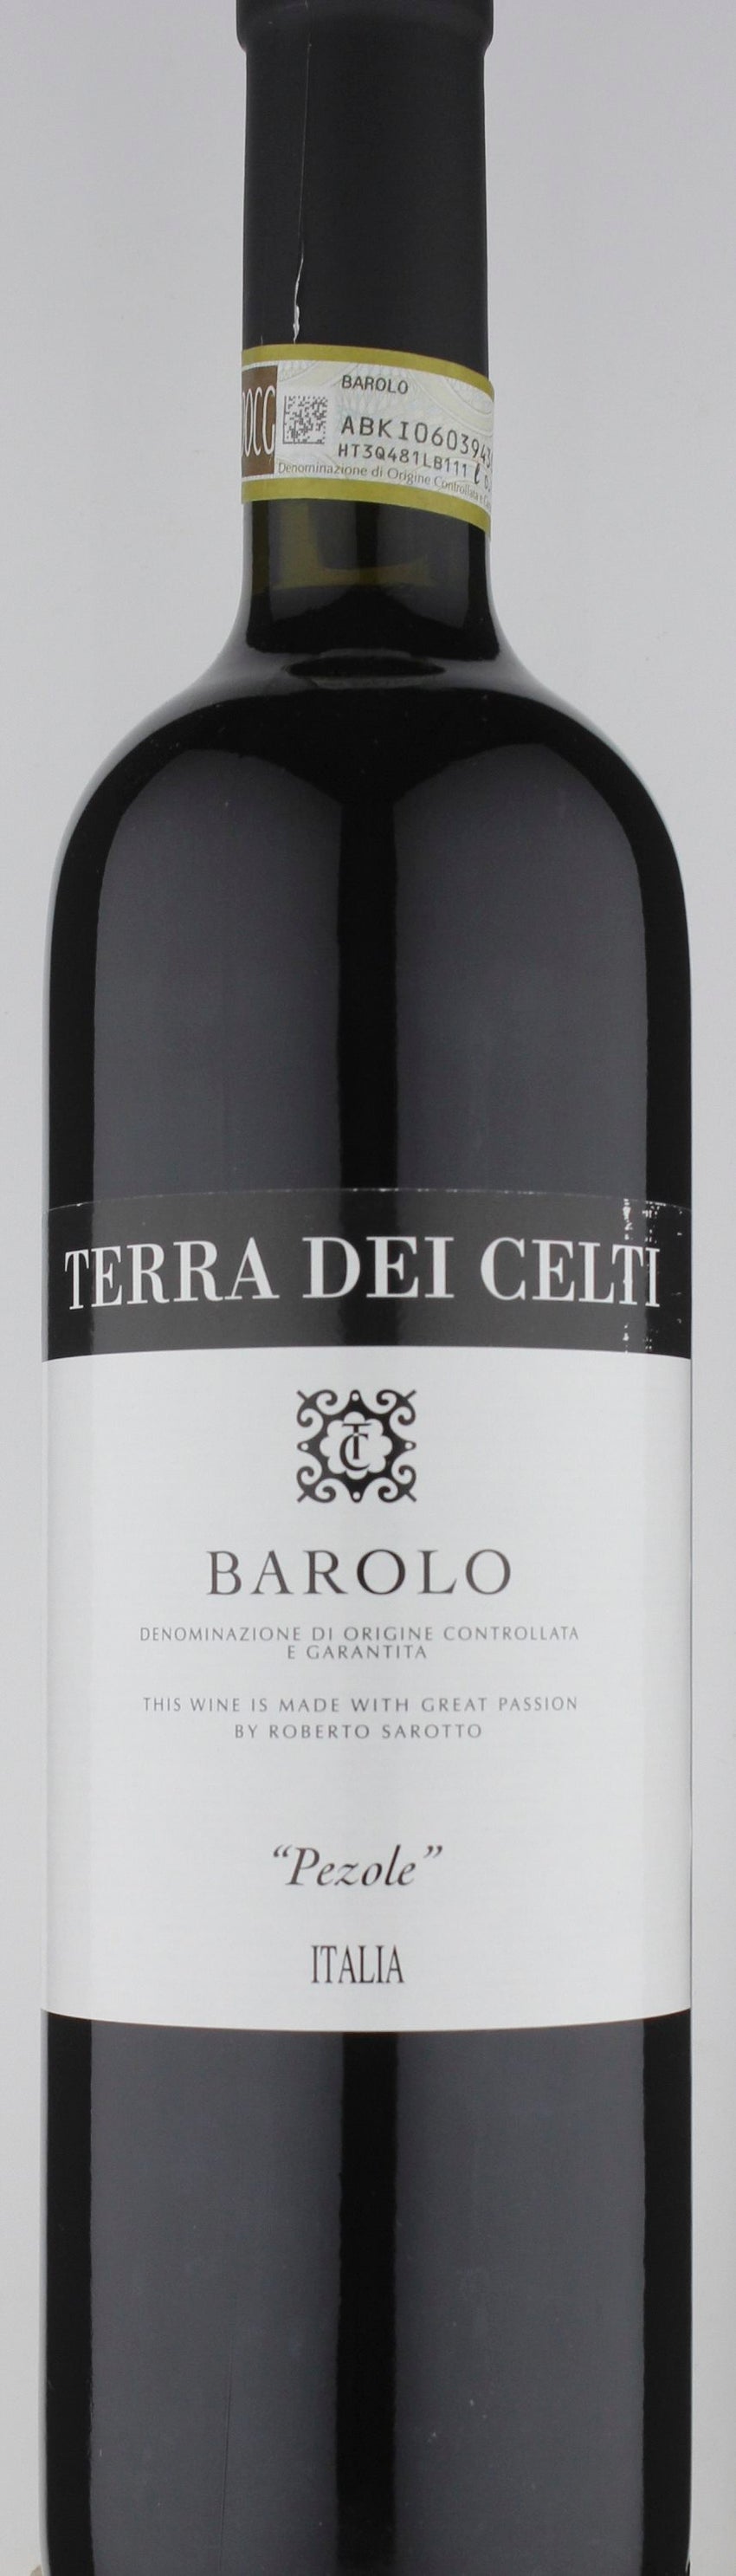 Roberto Sarotto DOCG Terra Del Celti Other Variety 2015